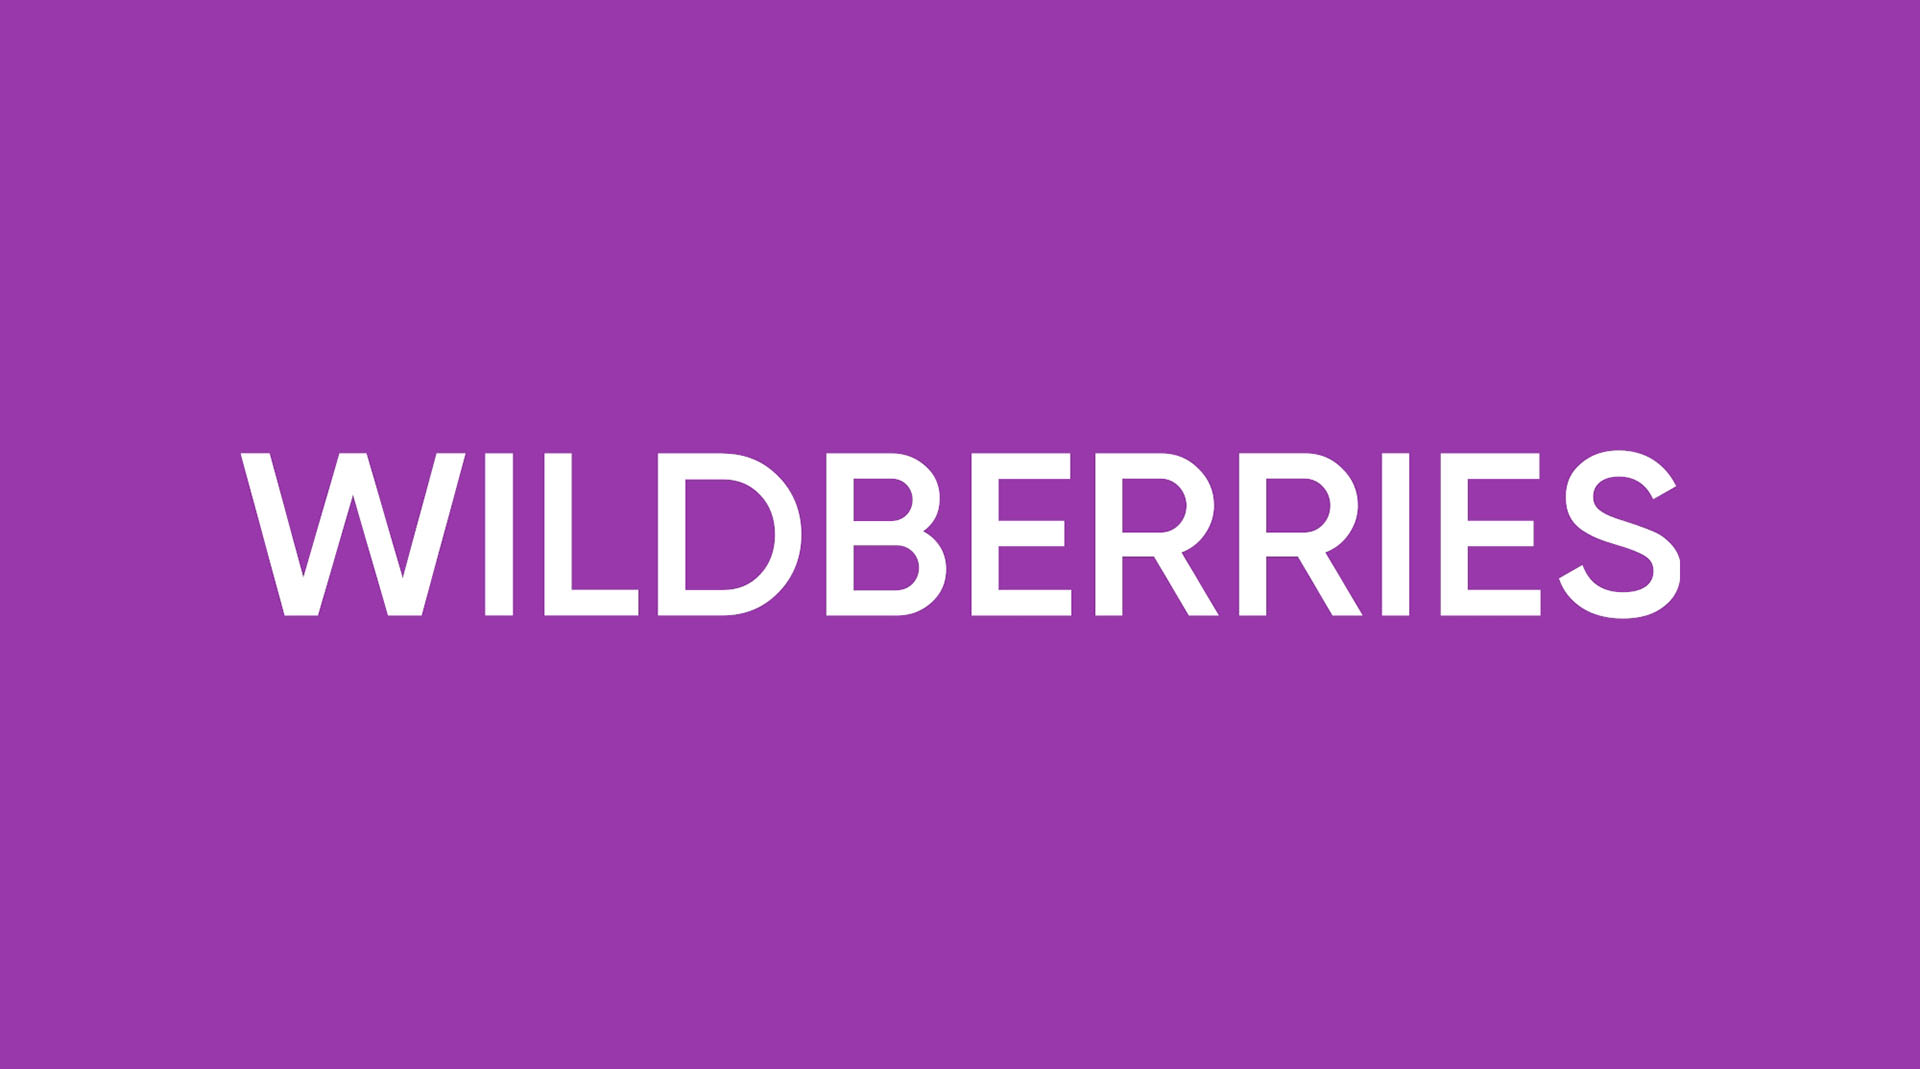 Wildberries seller phoenix audio duet executive black